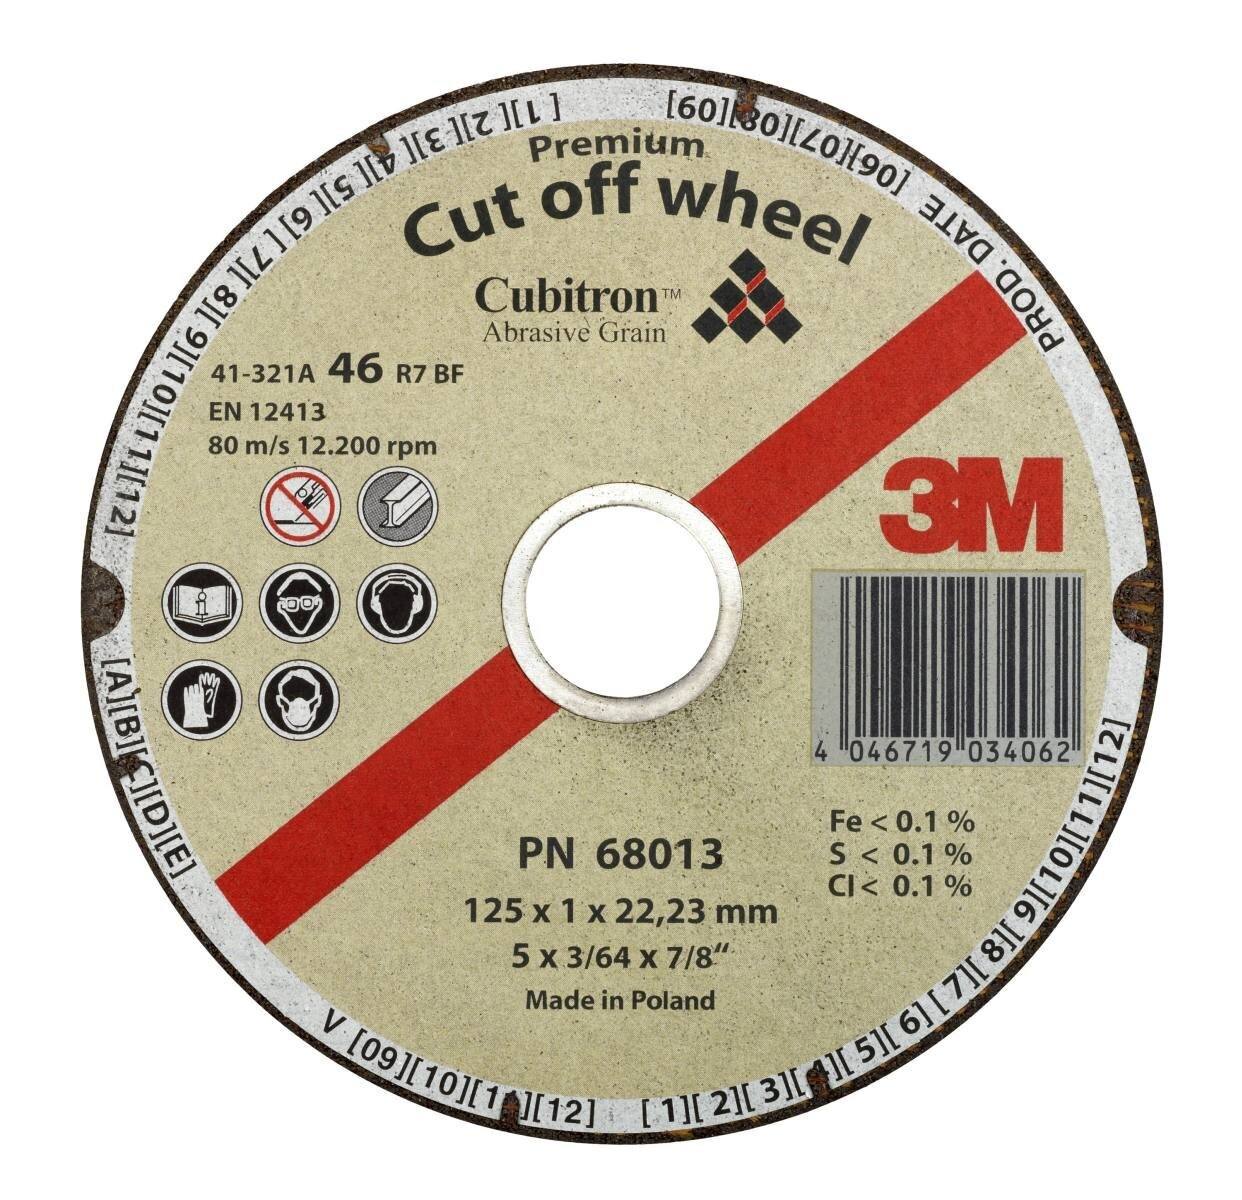 3M Cubitron II cut-off wheel, 115 mm, 1.0 mm, 22.23 mm, 60 65513